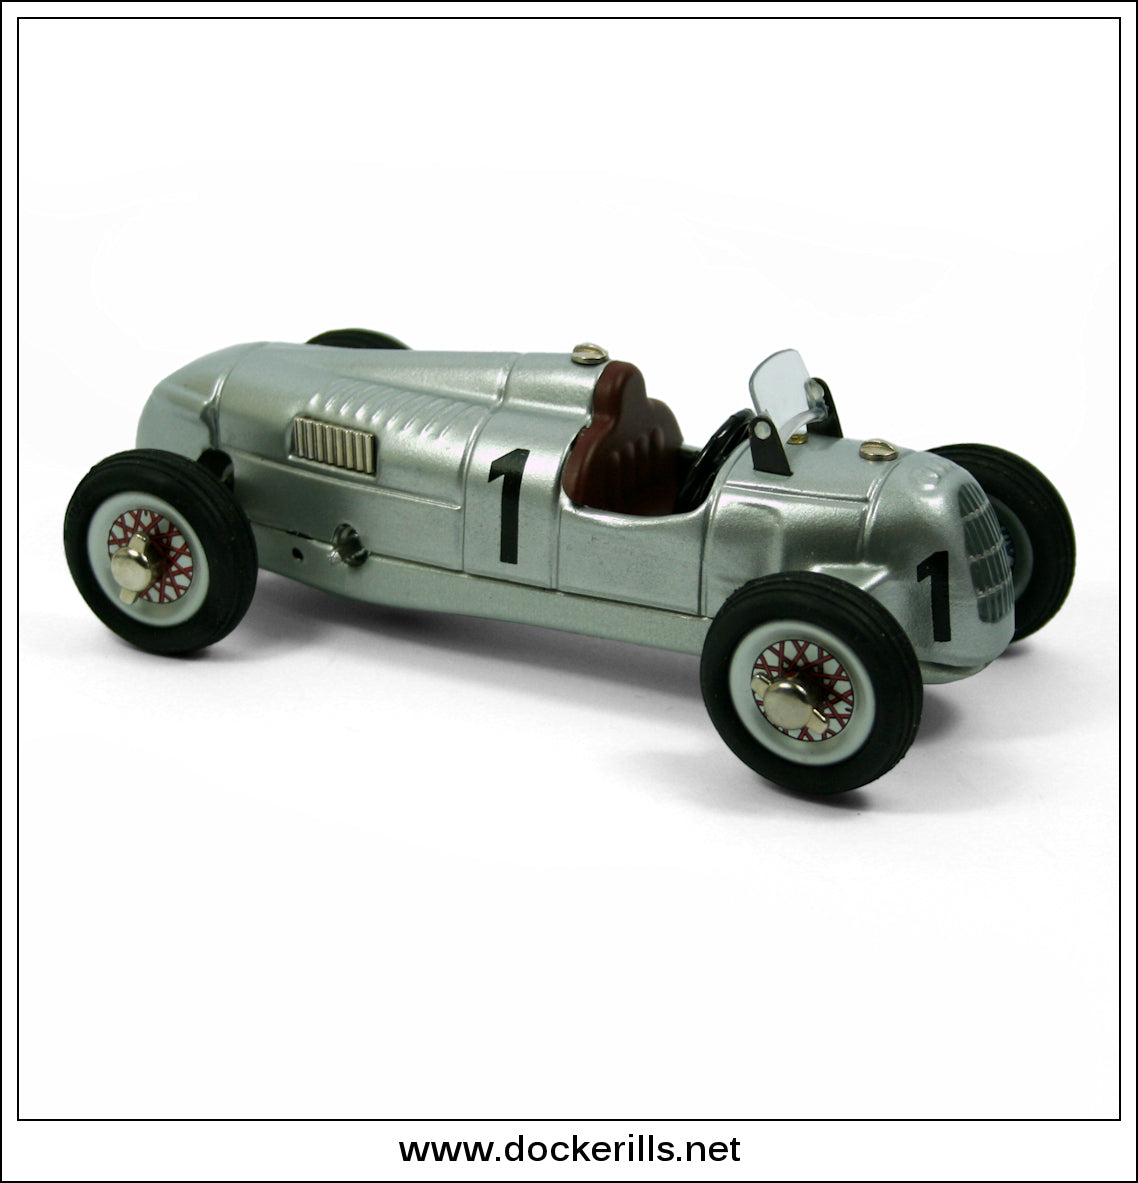 Studio II Auto Union Racing Car. Tin Plate Clockwork Toy, Schuco, Germany.